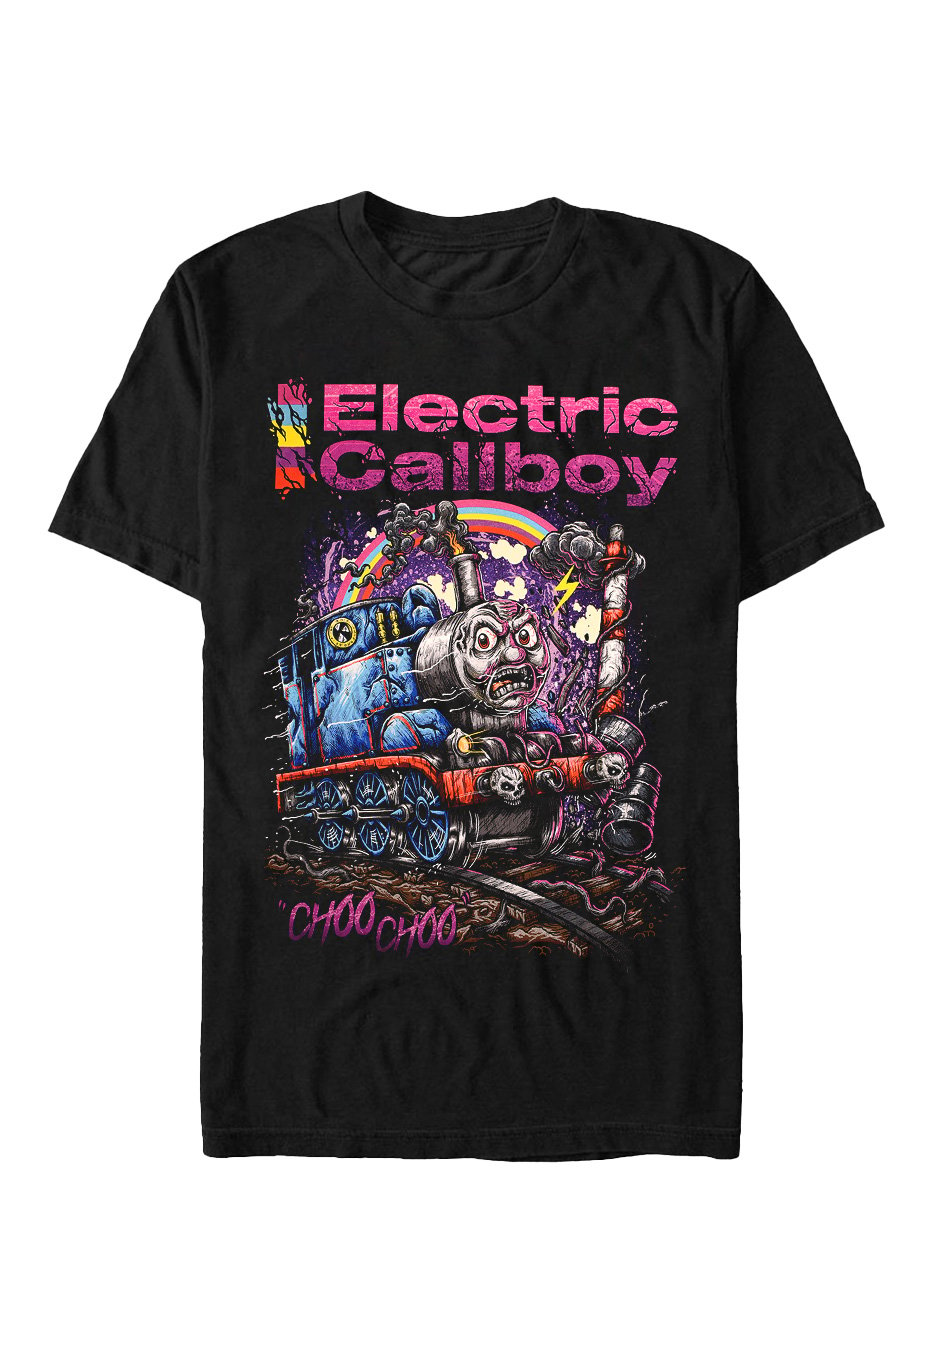 Electric Callboy - Choo Choo - T-Shirt